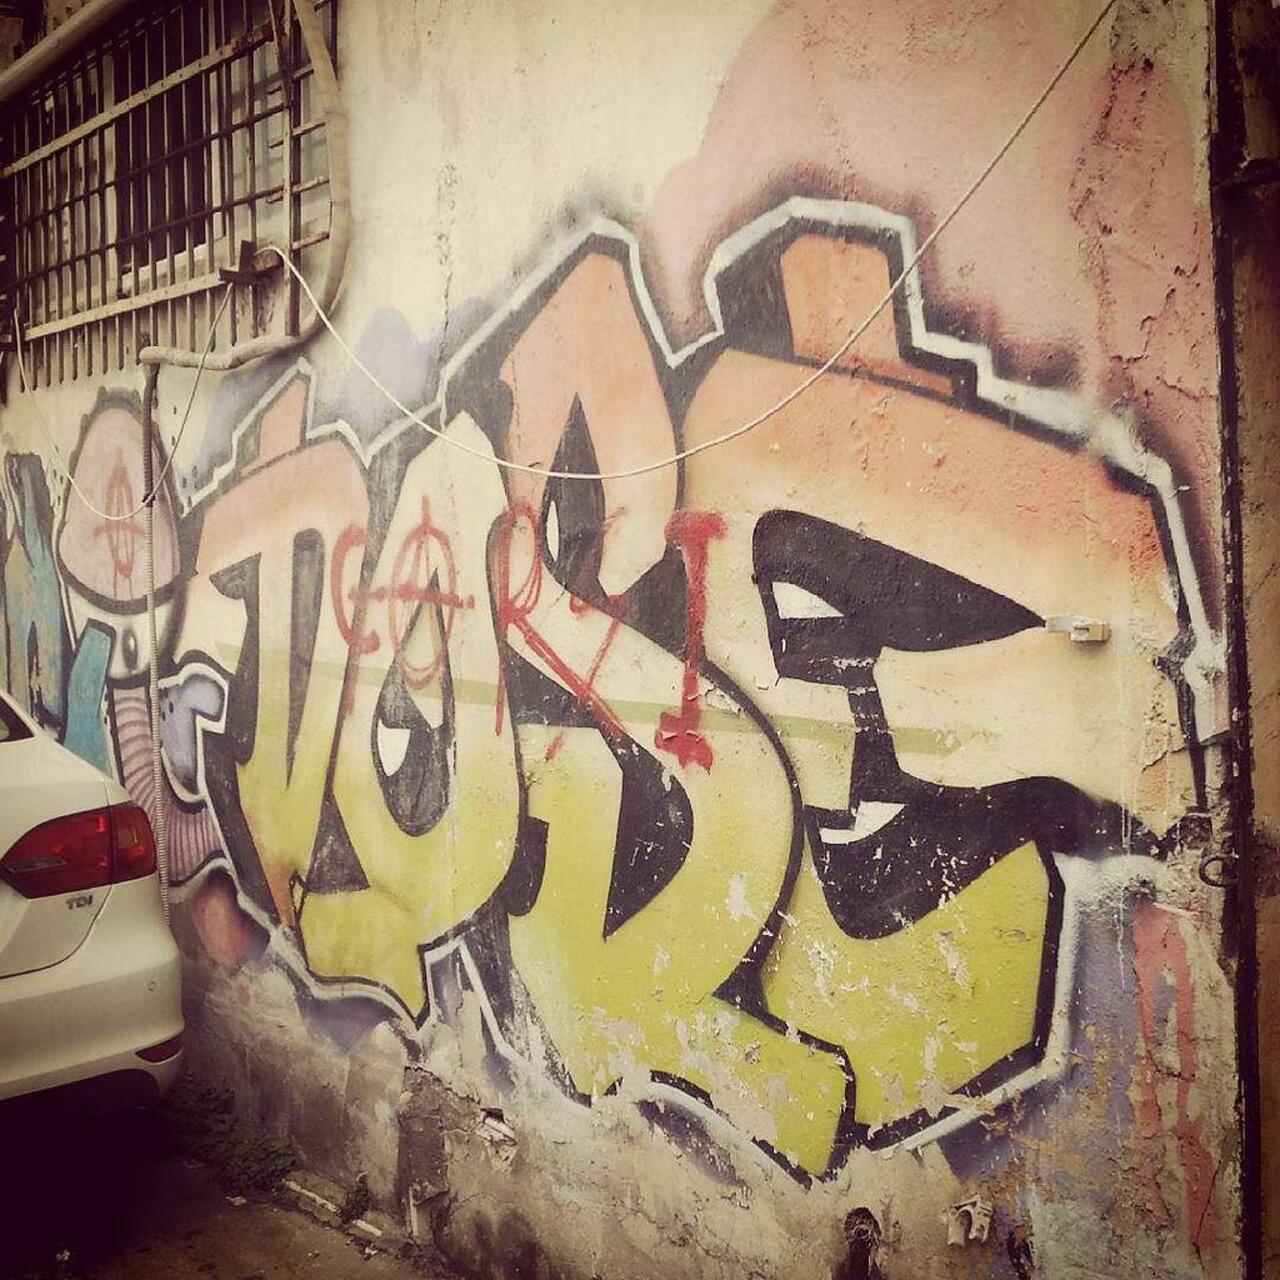 #streetartkadikoy #streetart #graffiti #publicart #urbanart #sokaksanatı #streetartistanbul #istanbulstreetart #gra… http://t.co/6pwmAm2mmW